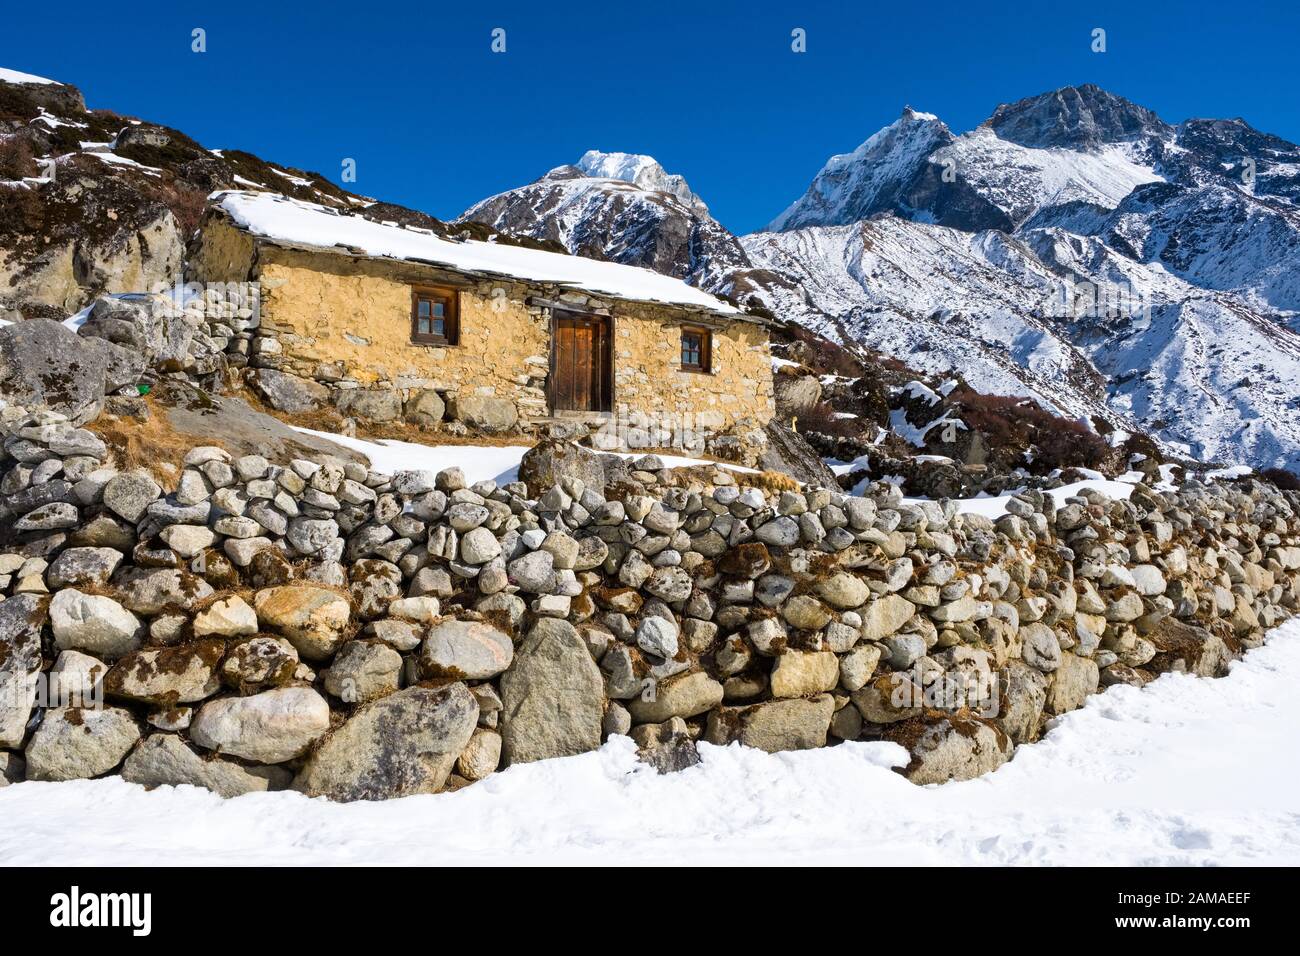 Sherpa farmstead in winter, Khumbu region of Nepal Himalayas Stock Photo